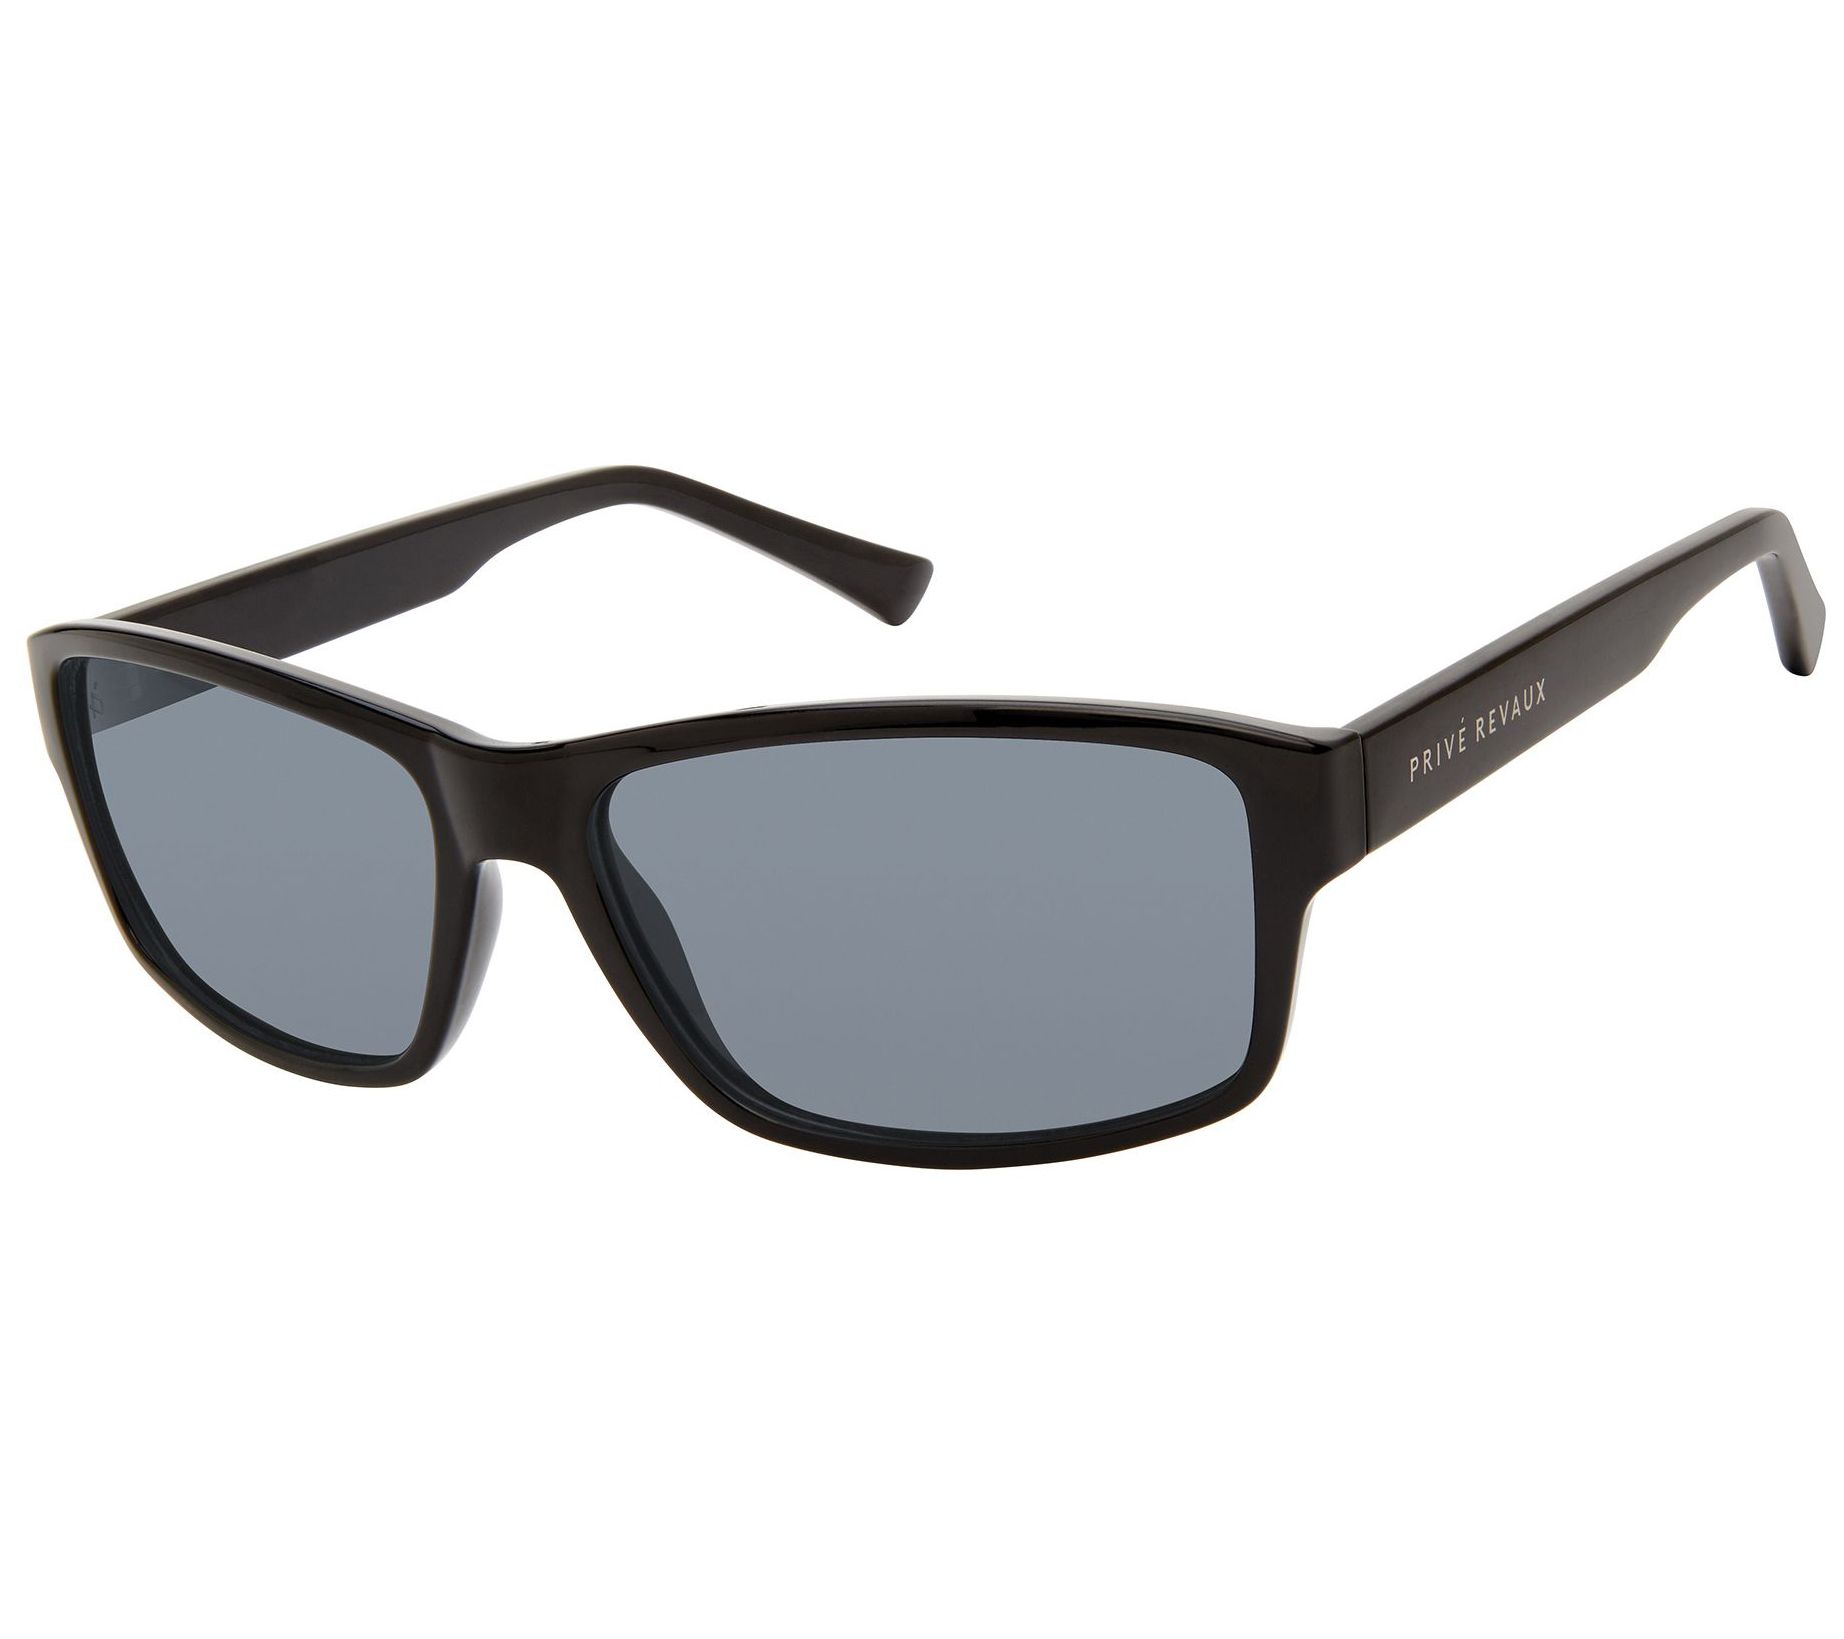 Prive Revaux Polarized Rectangle Sunglasses - The Typhoon - QVC.com